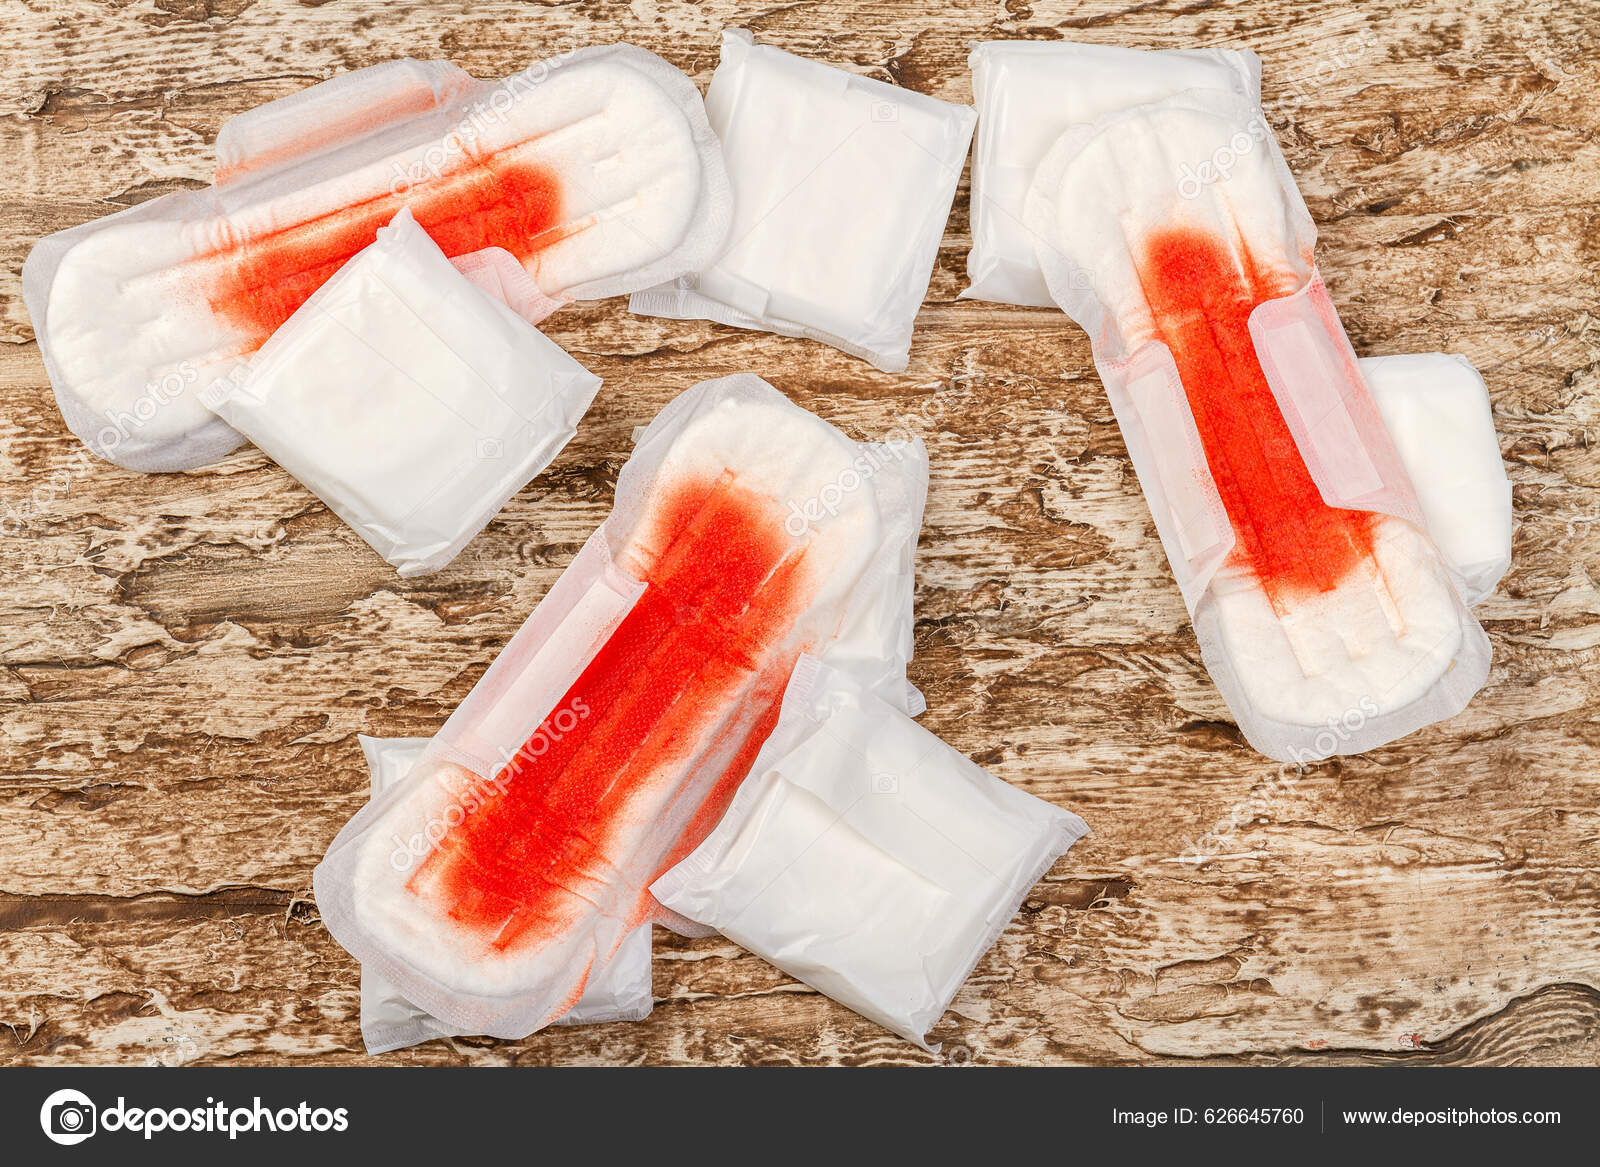 https://st5.depositphotos.com/3994509/62664/i/1600/depositphotos_626645760-stock-photo-pile-used-sanitary-pads-blood.jpg